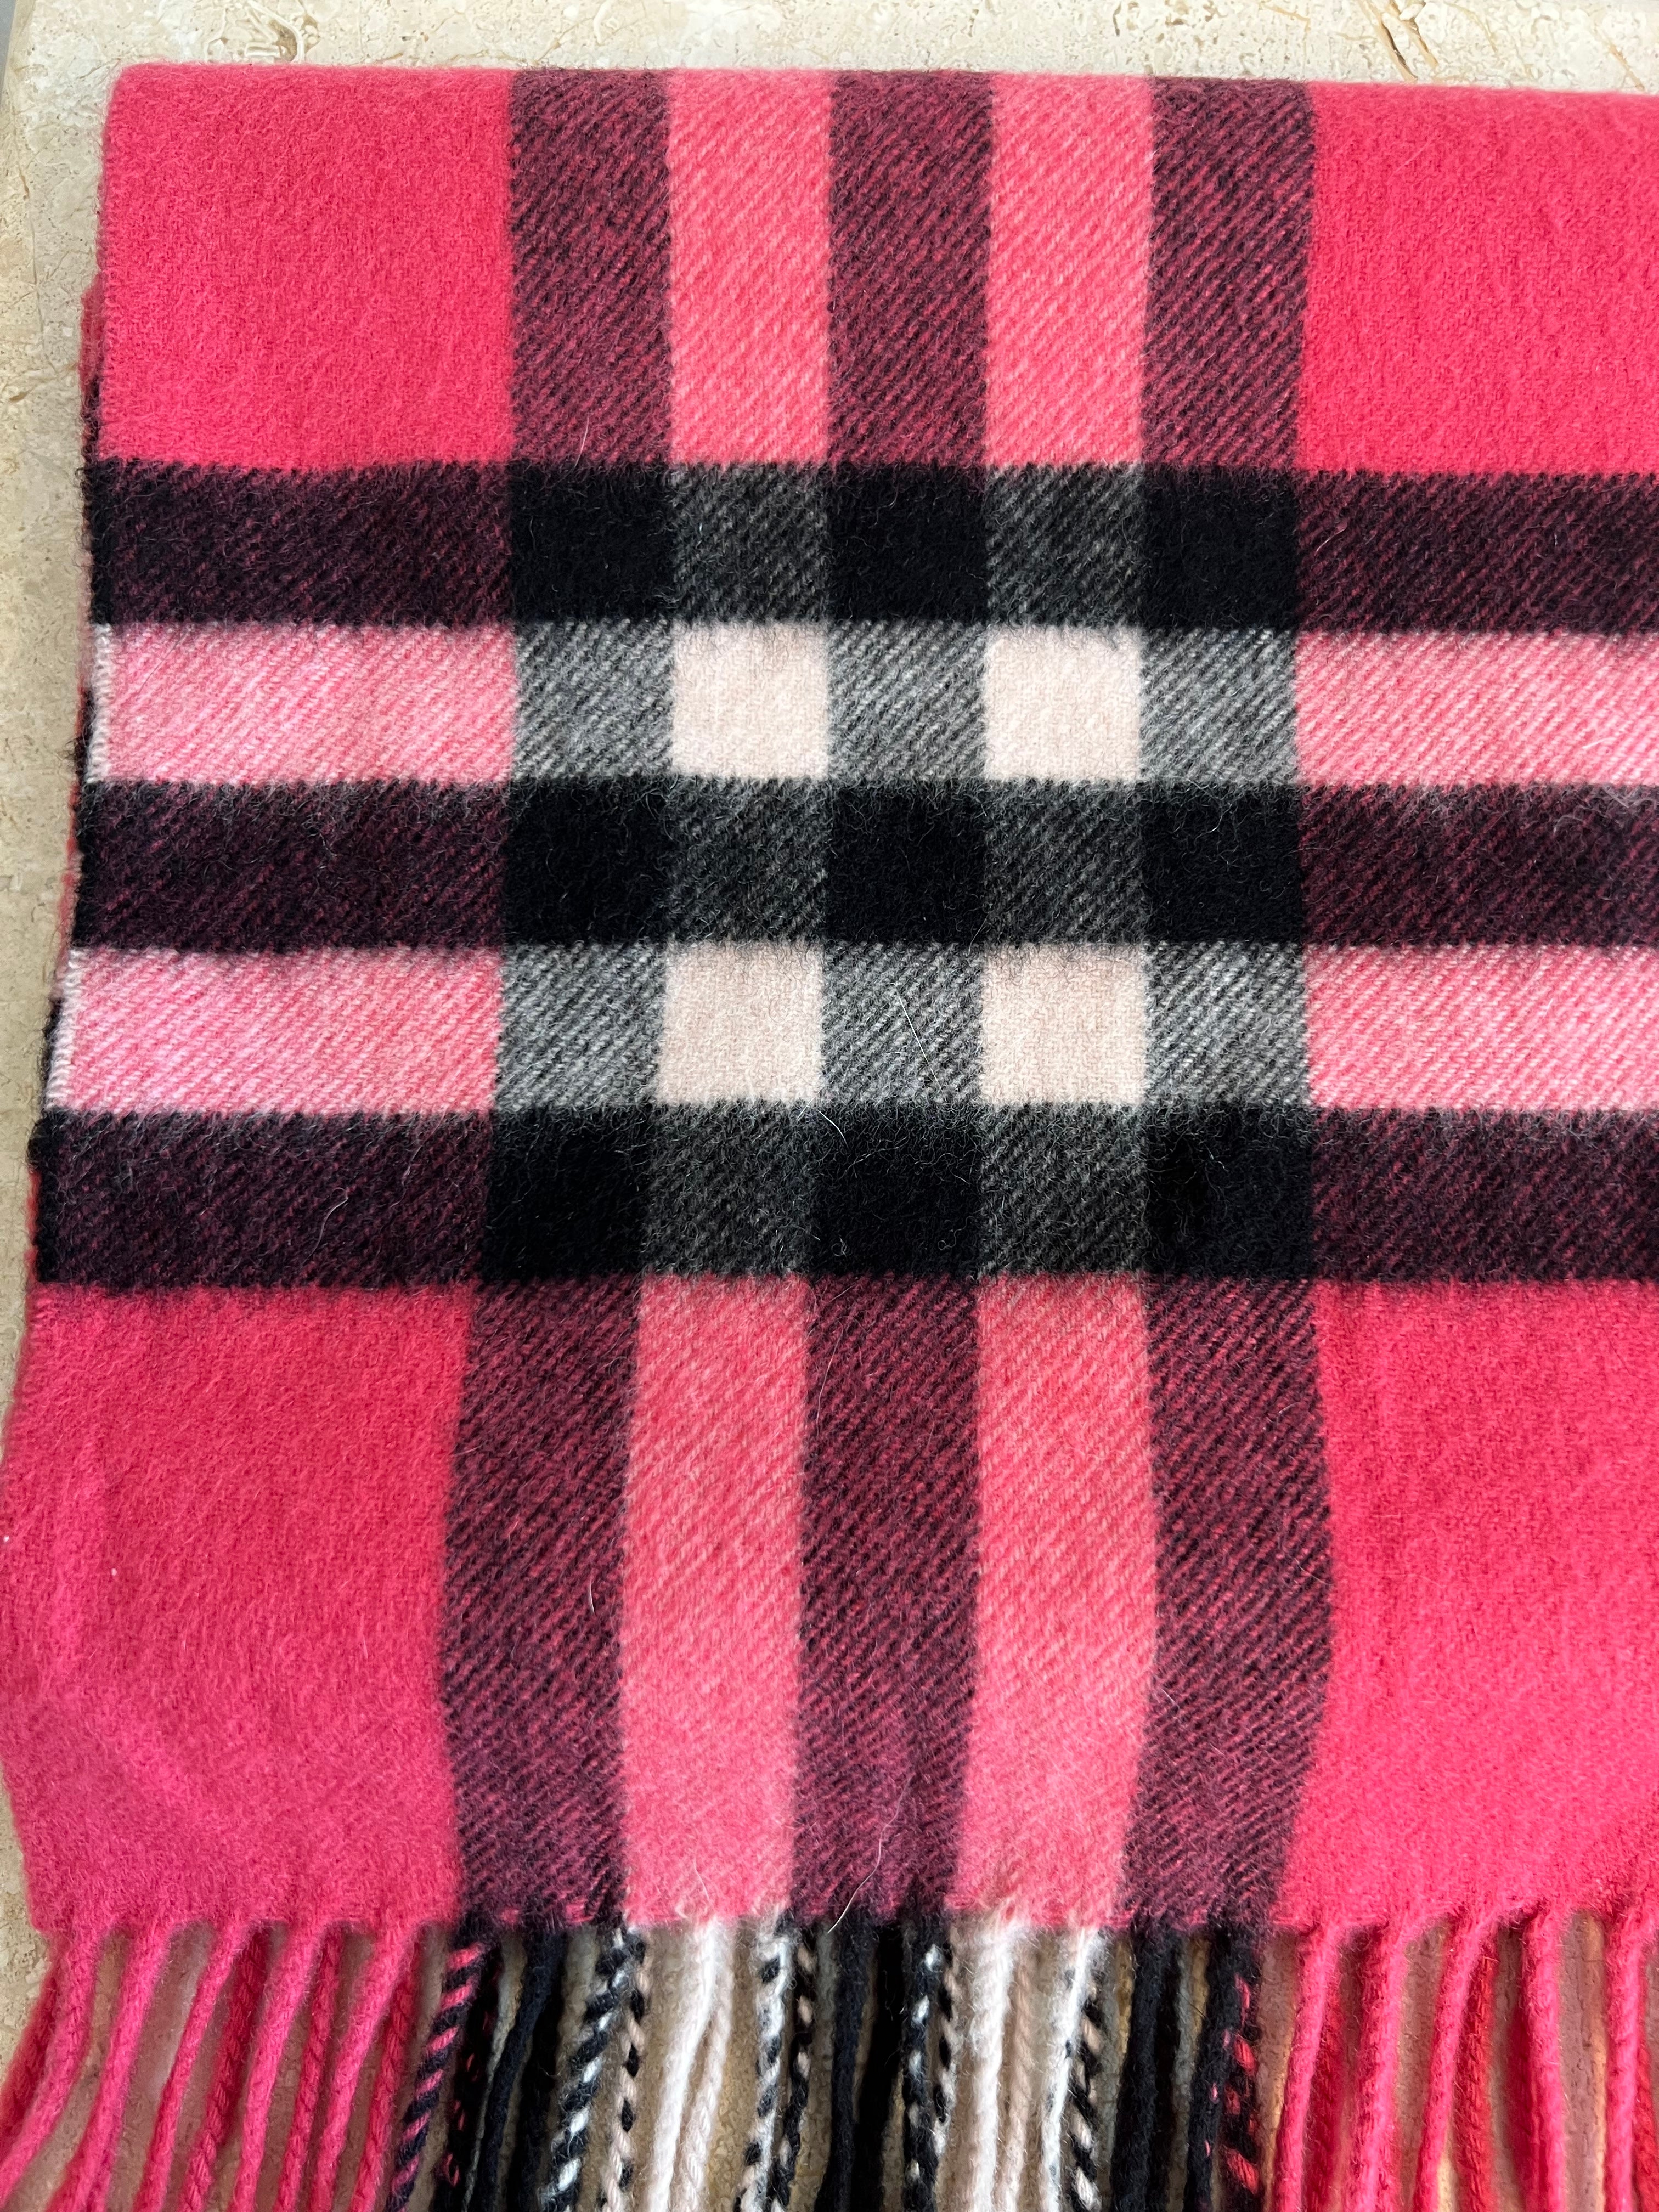 Arriba 69+ imagen hot pink burberry scarf